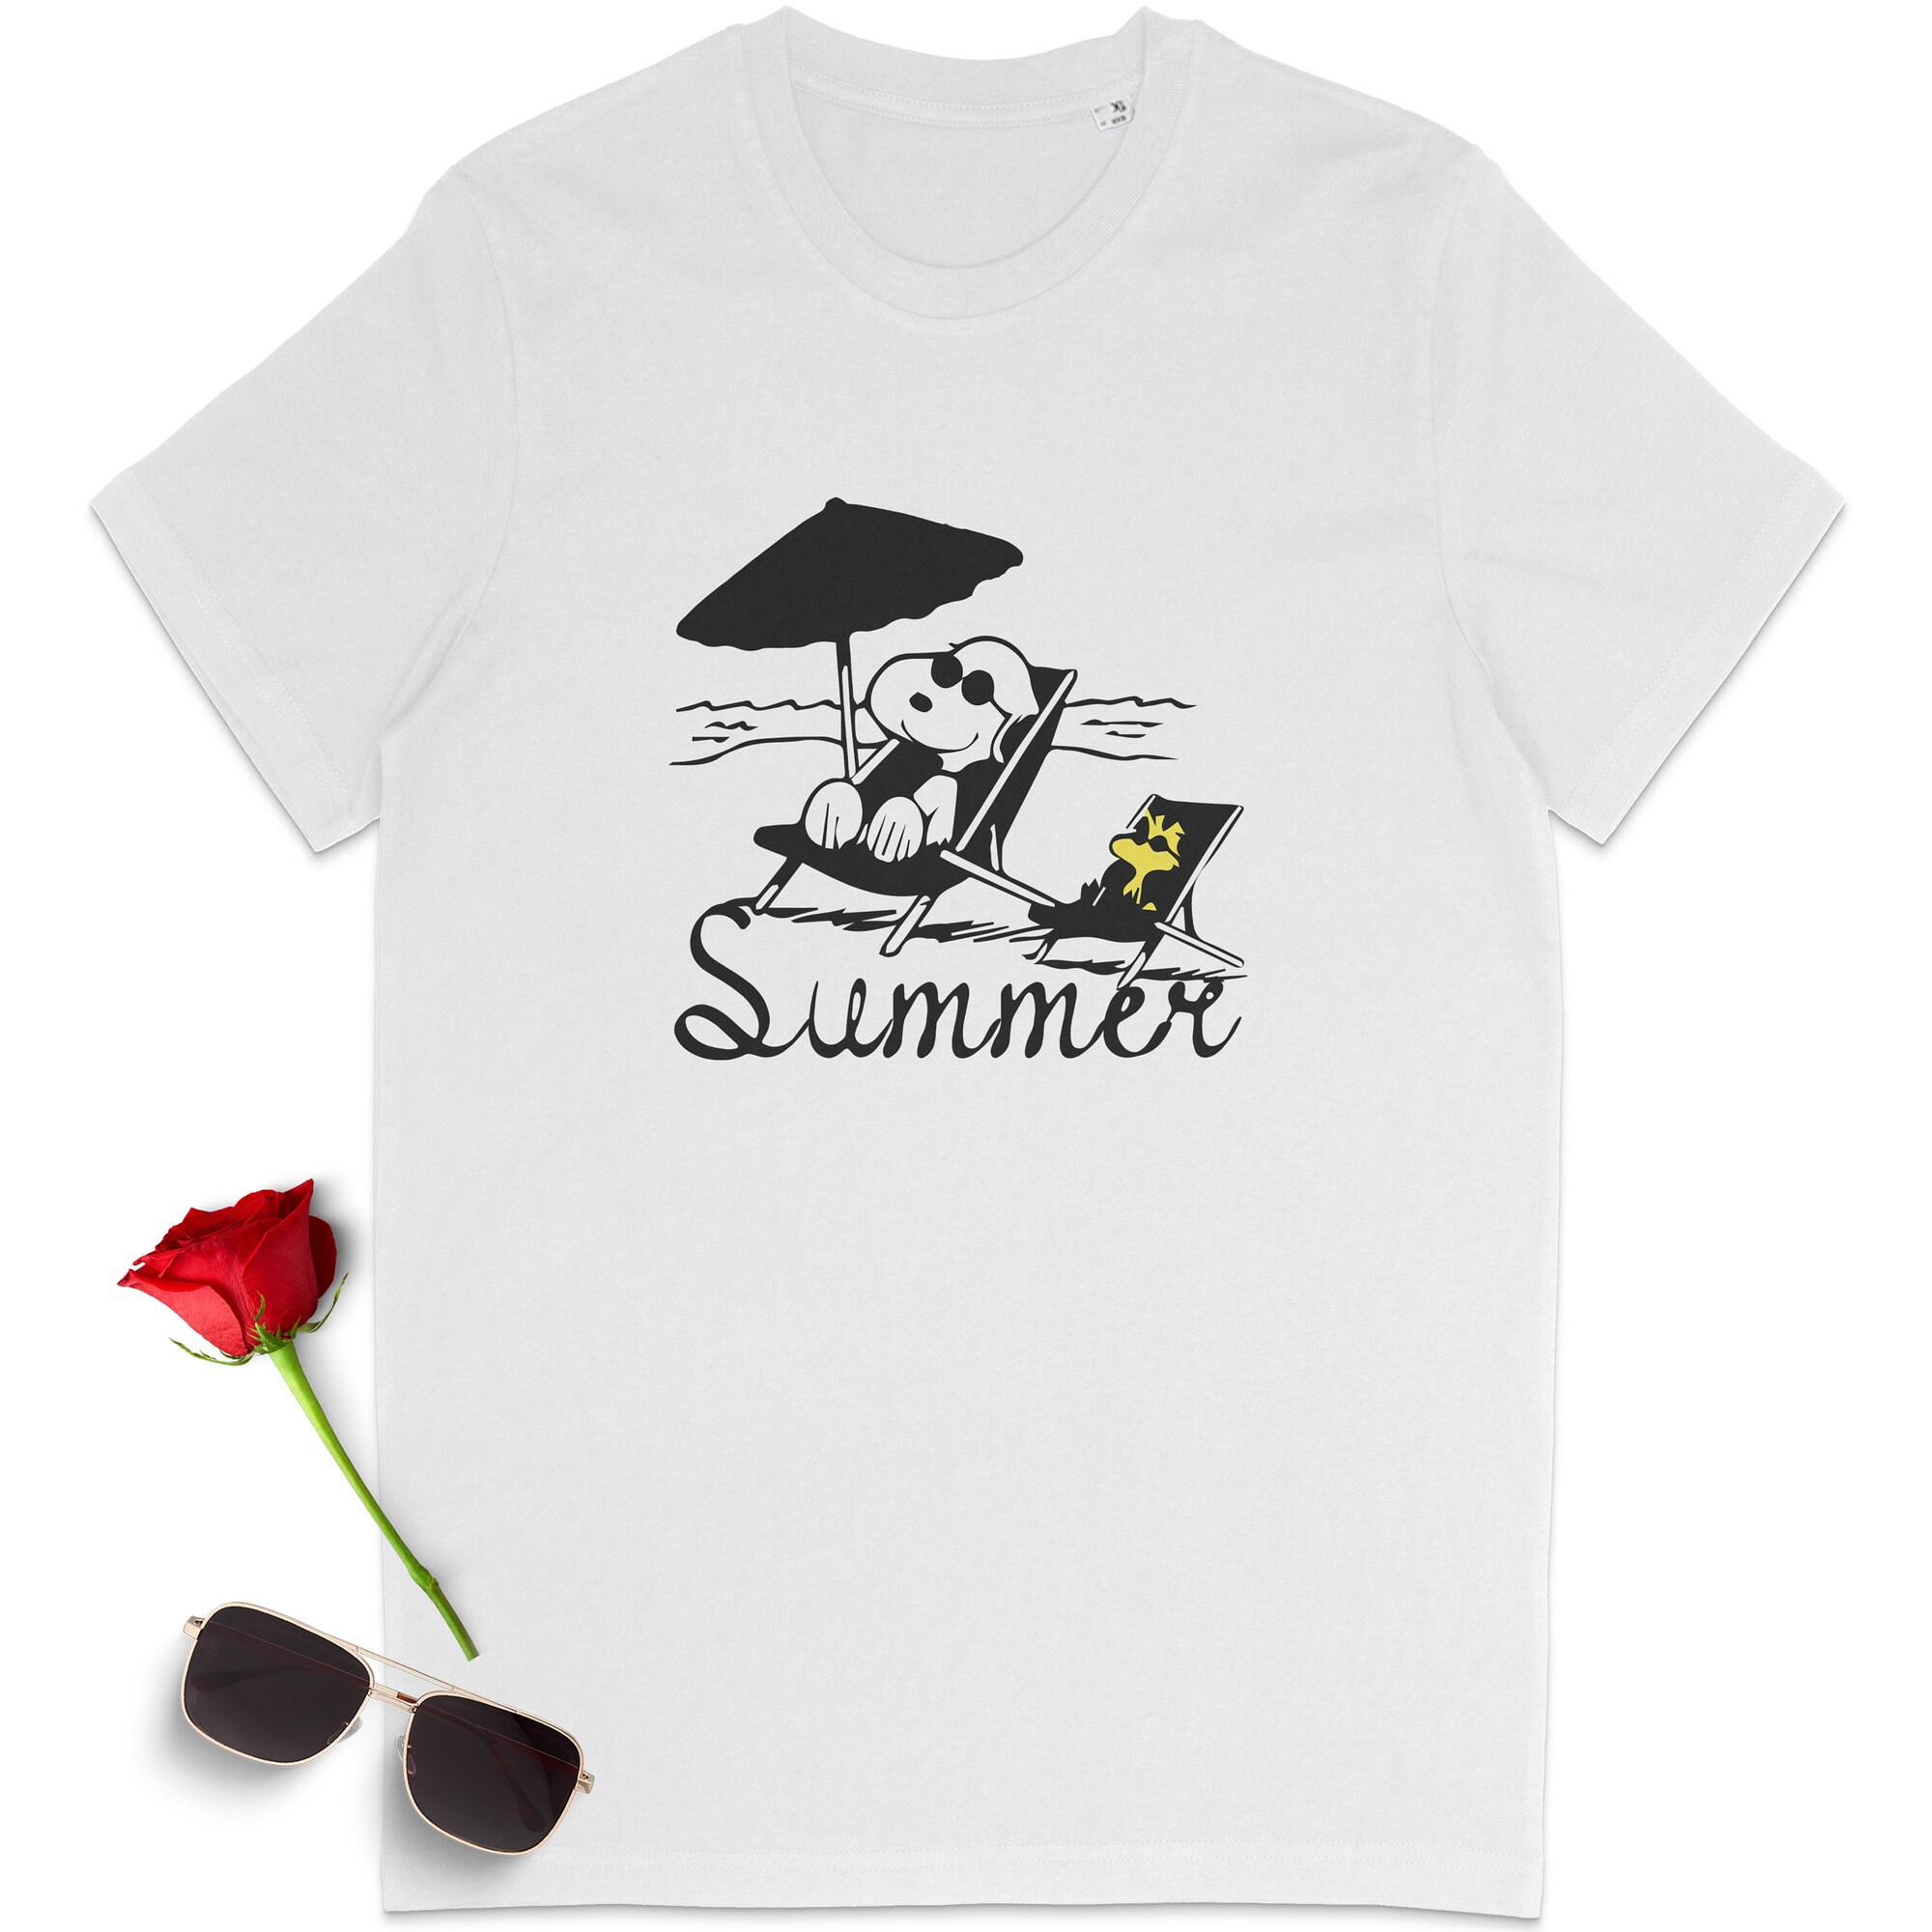 Snoopy Tshirt - Cartoon Snoopy Tee - Summer T-shirt - Snoopy Summer T-Shirt